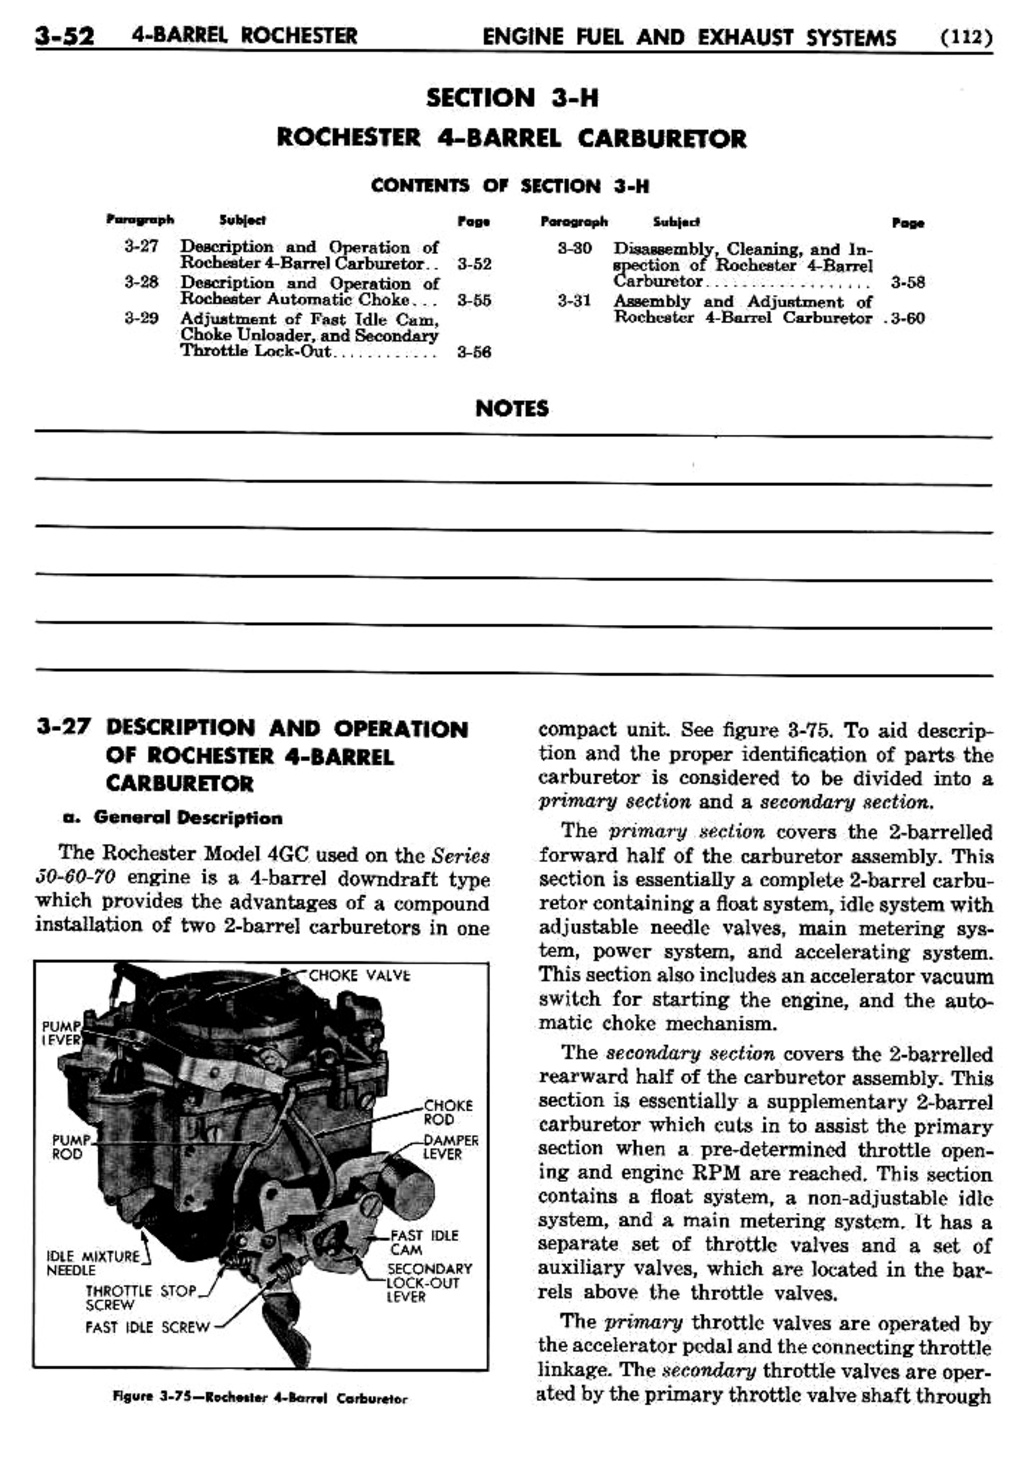 n_04 1956 Buick Shop Manual - Engine Fuel & Exhaust-052-052.jpg